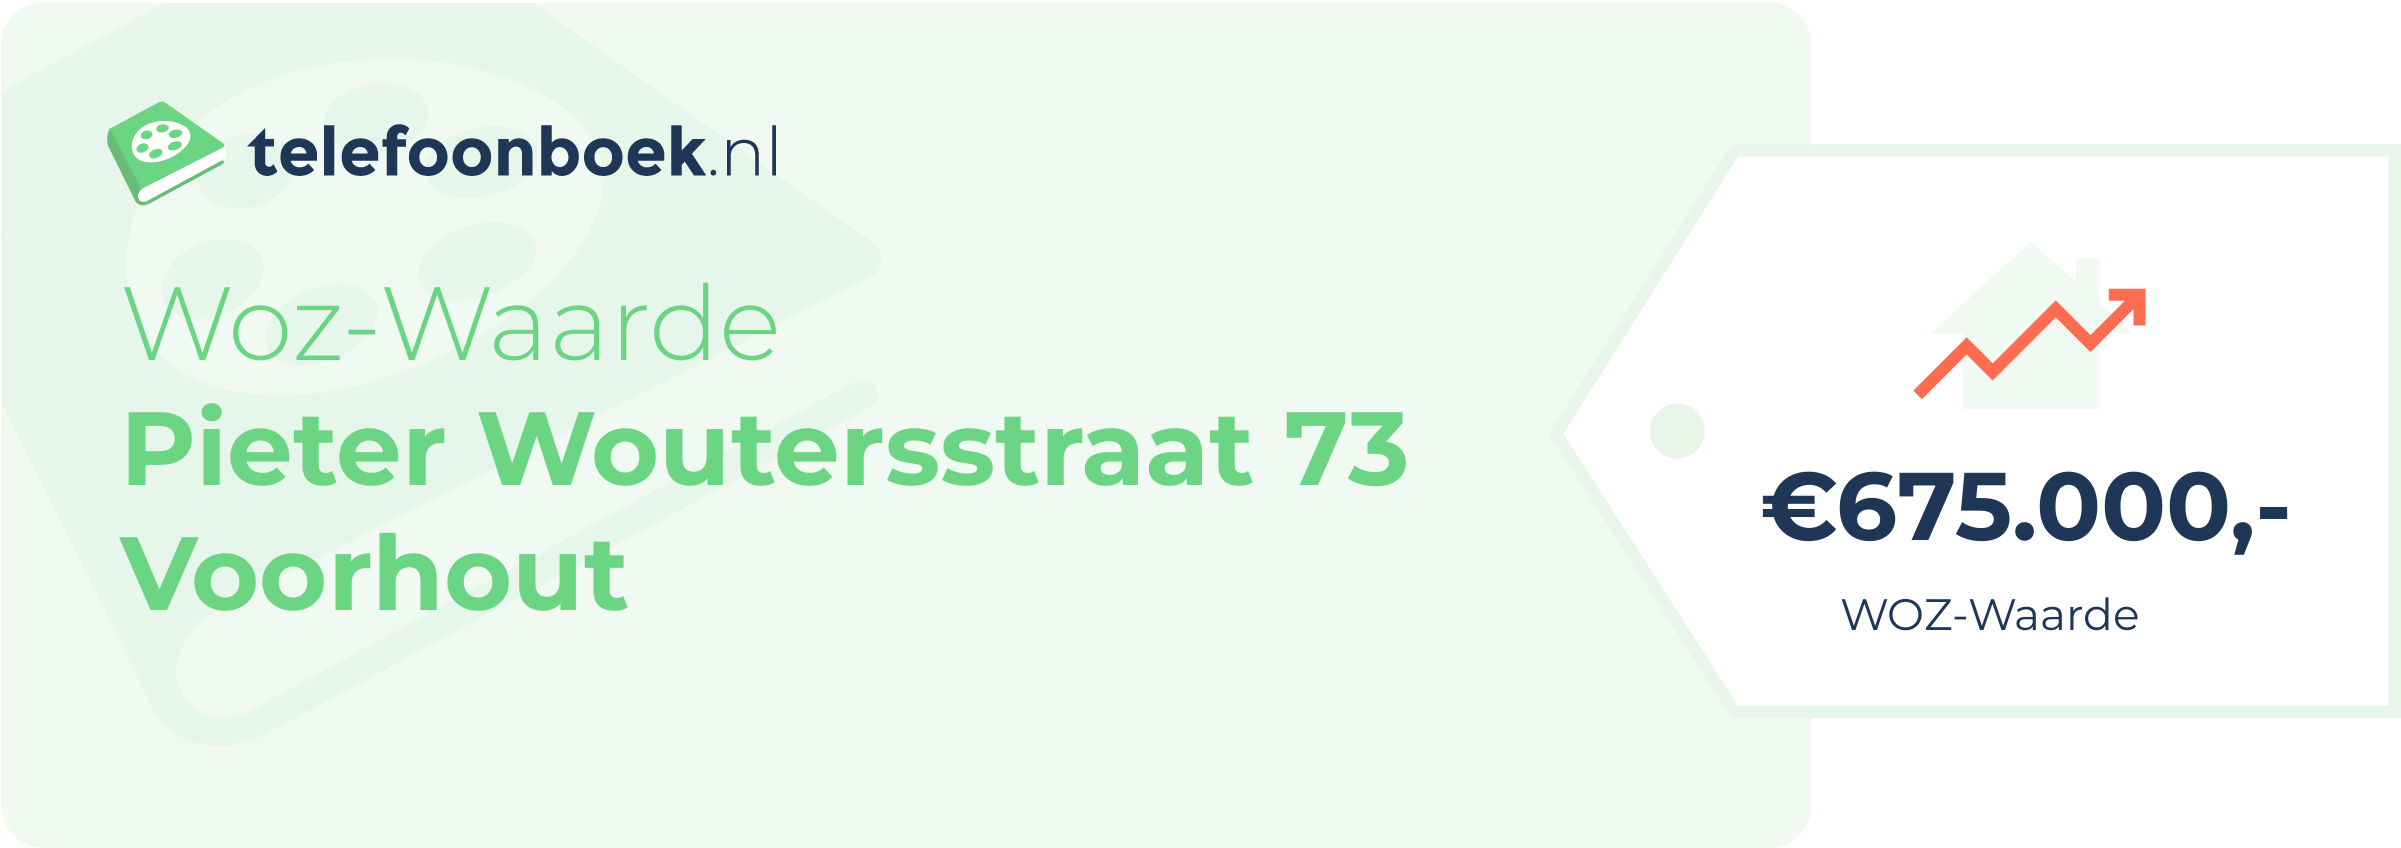 WOZ-waarde Pieter Woutersstraat 73 Voorhout